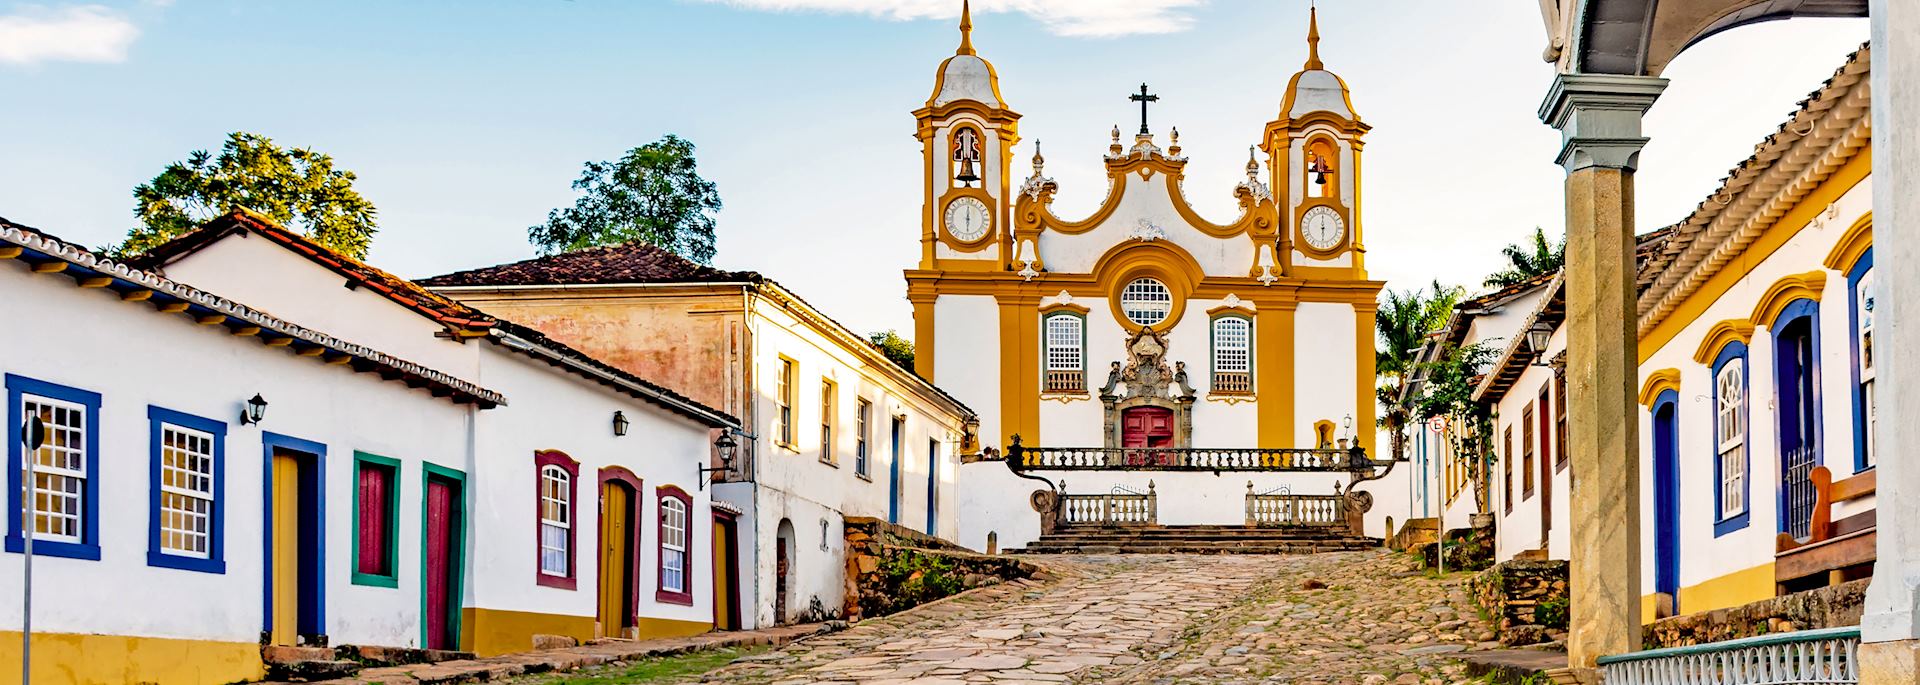 Church in Tiradentes